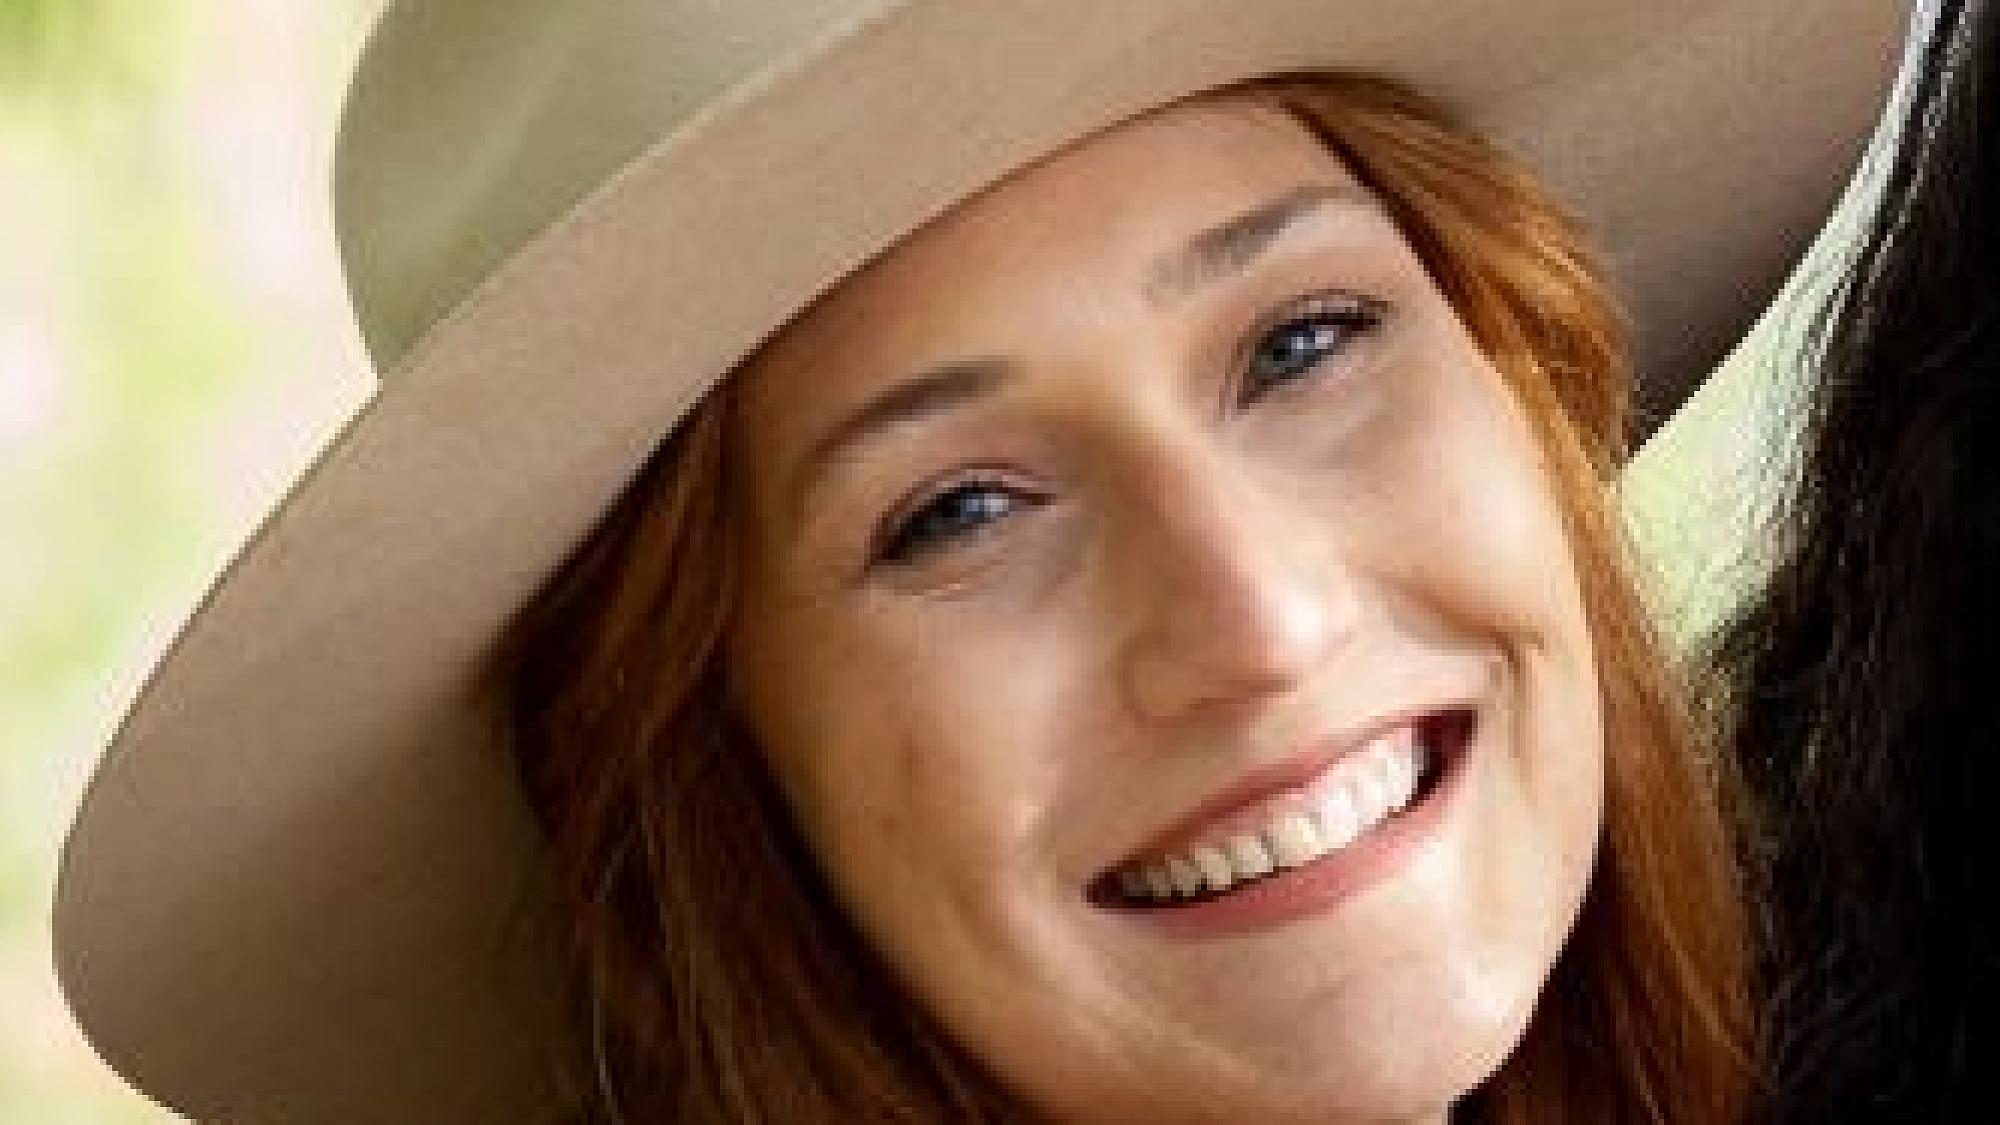 Alisa Hartline has long red hair and wears a beige hat outside.